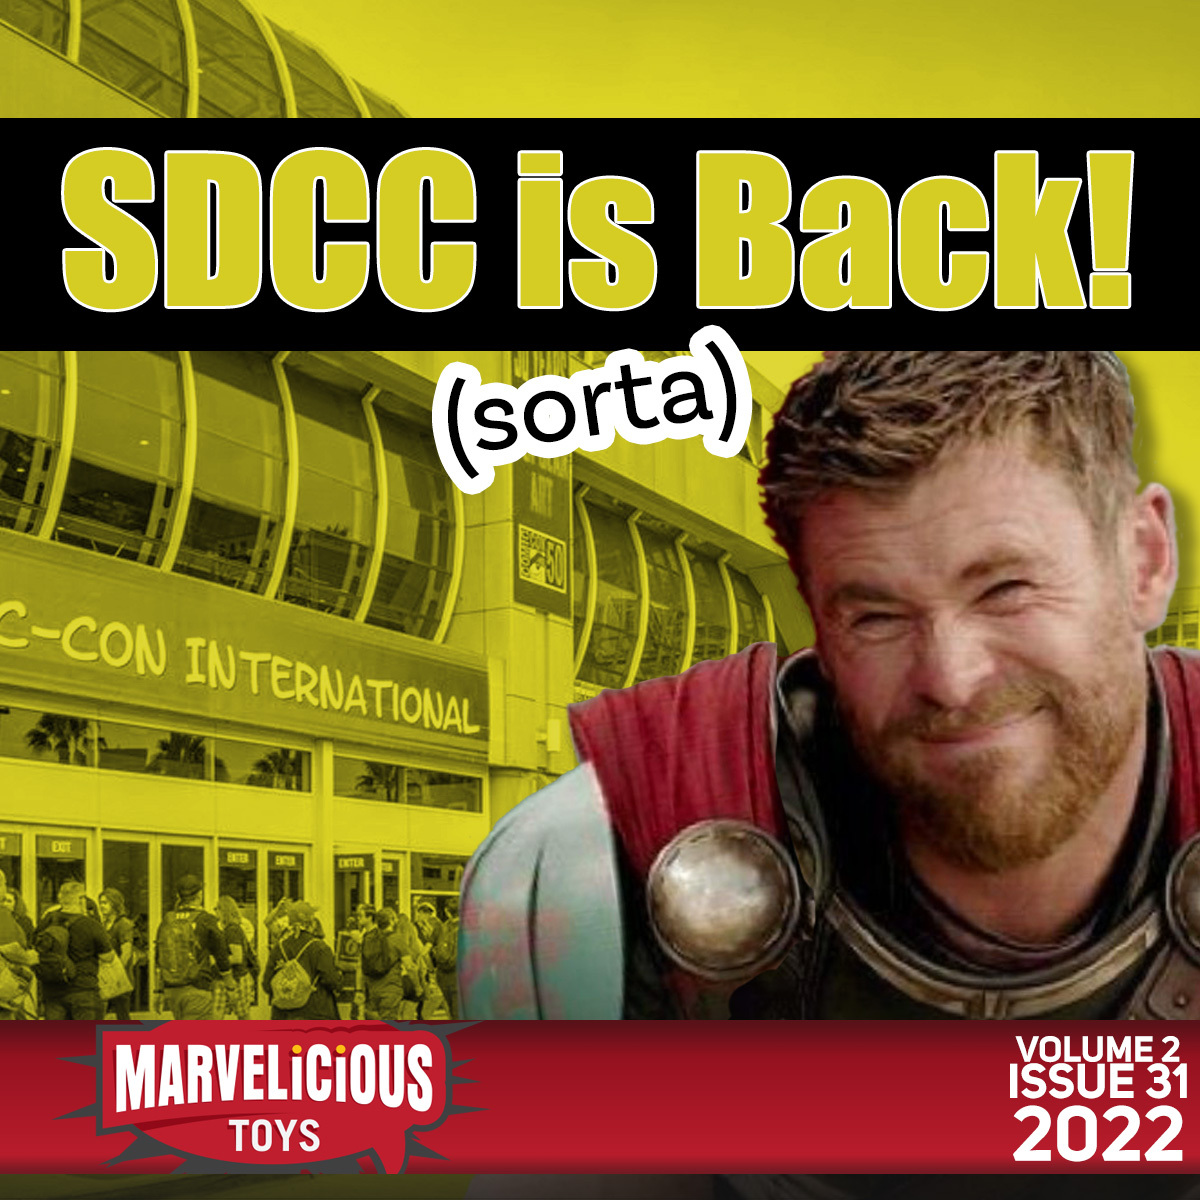 Vol 2, #31: SDCC is BACK! (sorta) {Video Podcast}